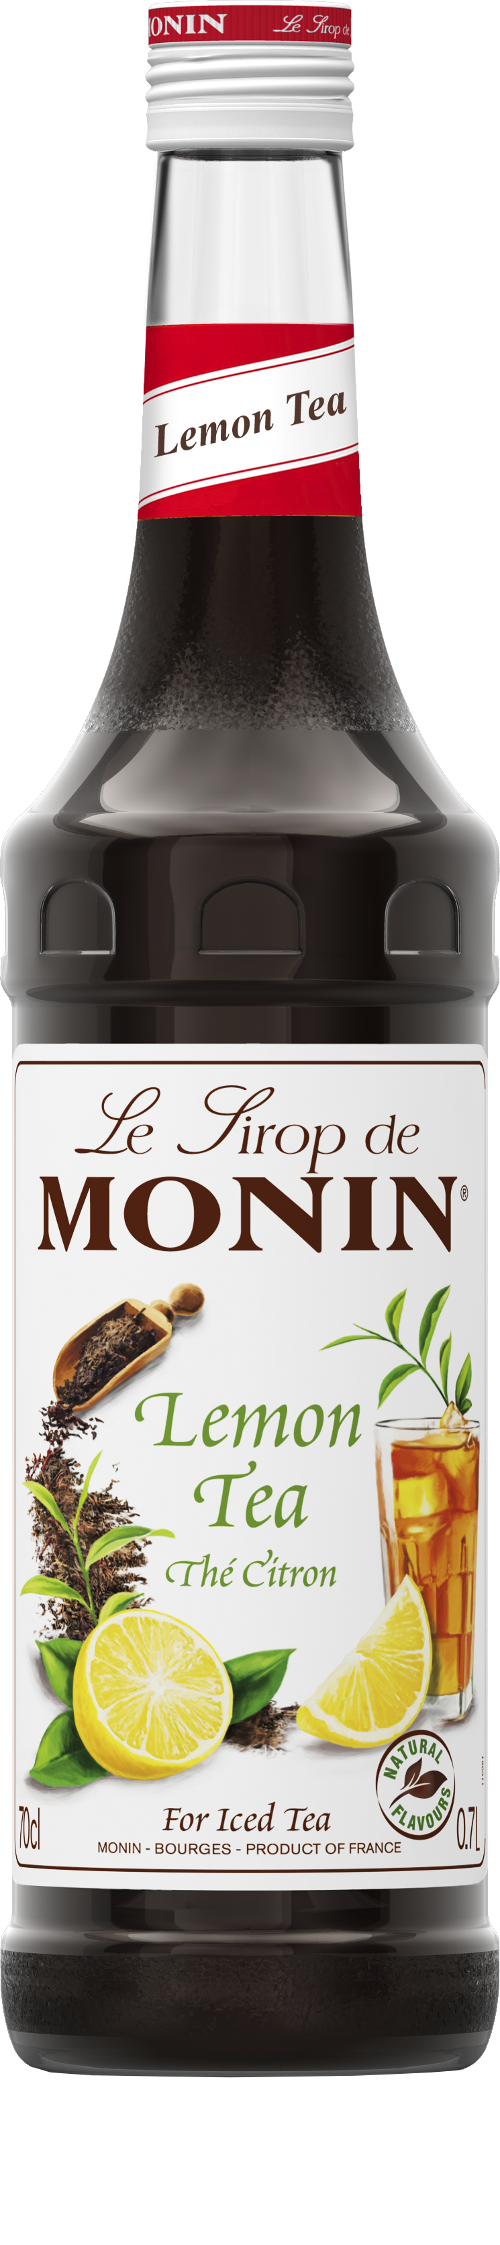 Le Sirop de MONIN Lemon Tea 0.7l